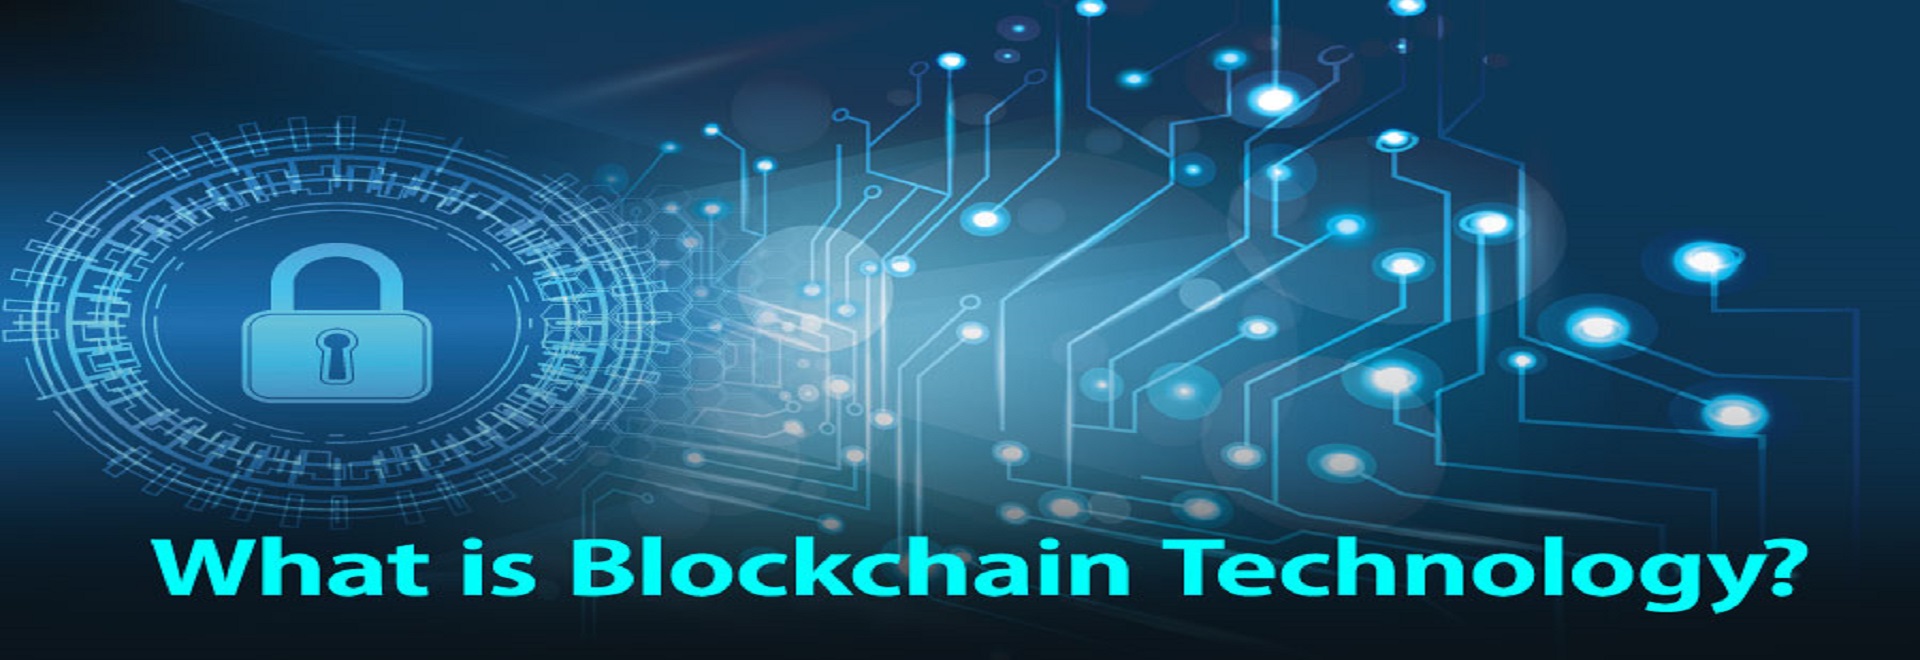 What is Blockchain Technology - صفحه اصلی